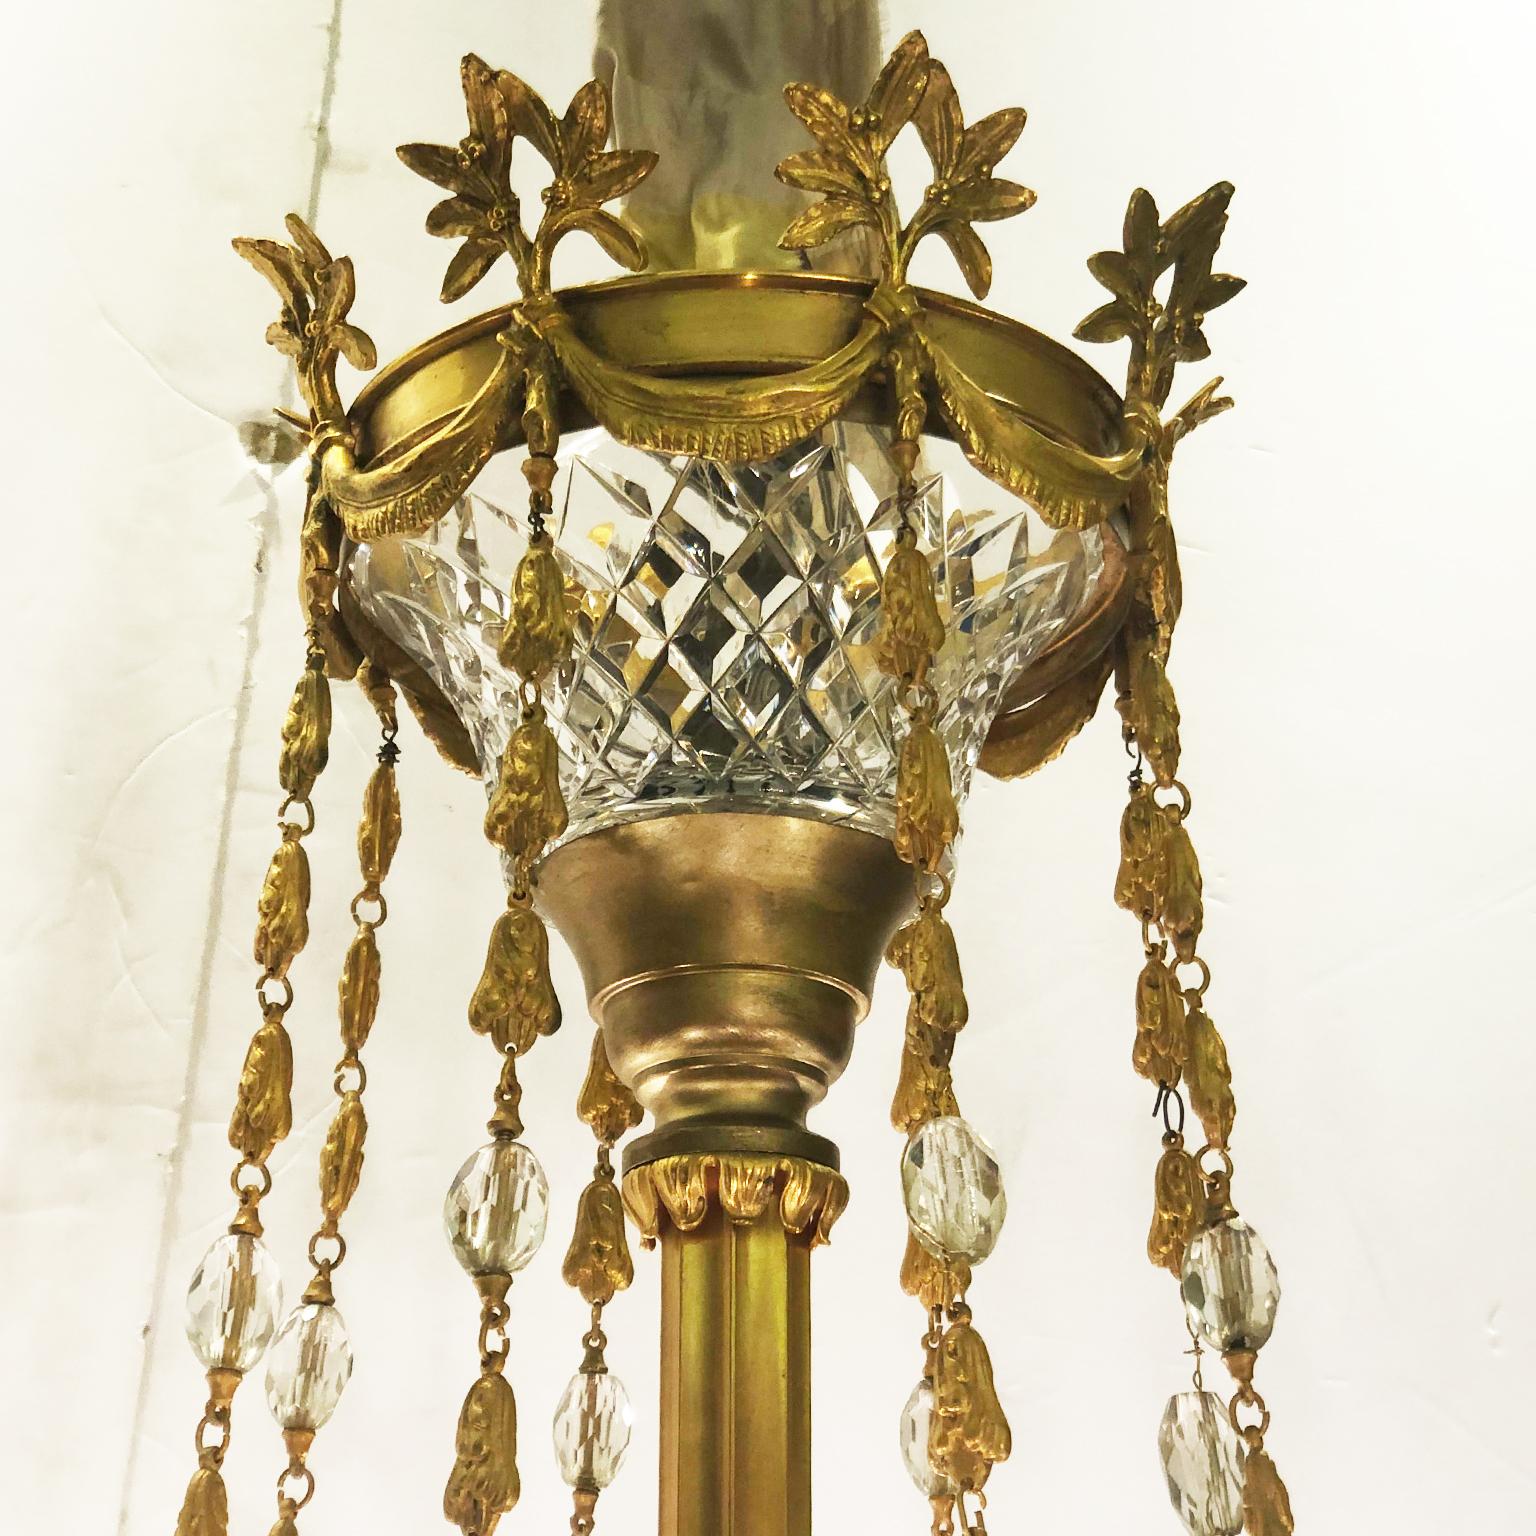 Italian Empire Stile Chandelier Gilded Bronze 20 Lights to Singer Caruso 4